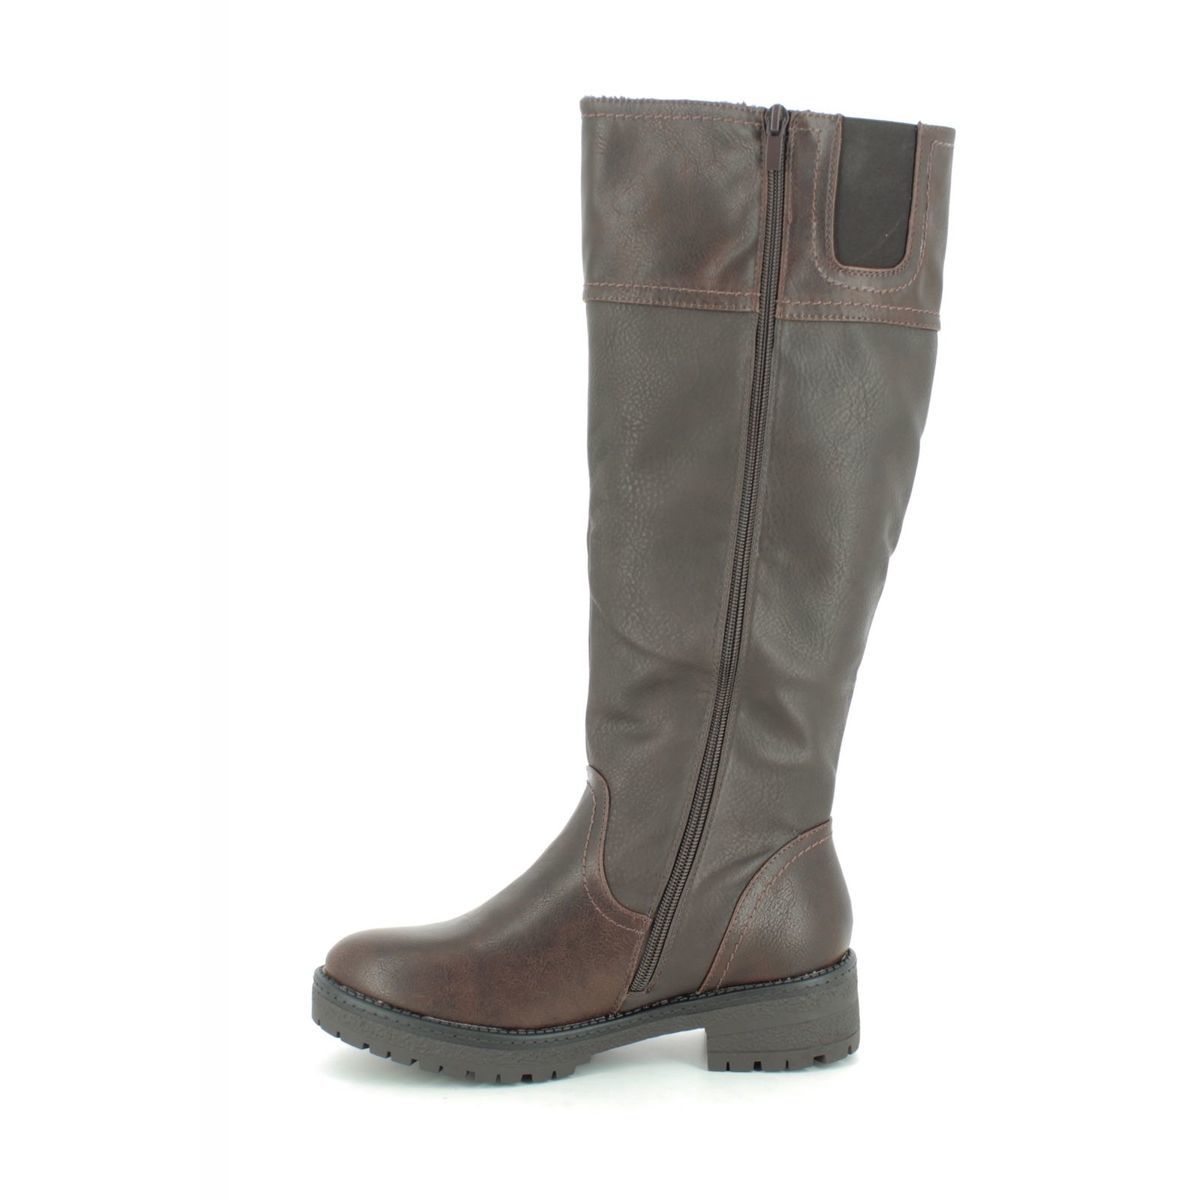 Heavenly Feet Burley 6 9524-20 Chocolate brown knee-high boots